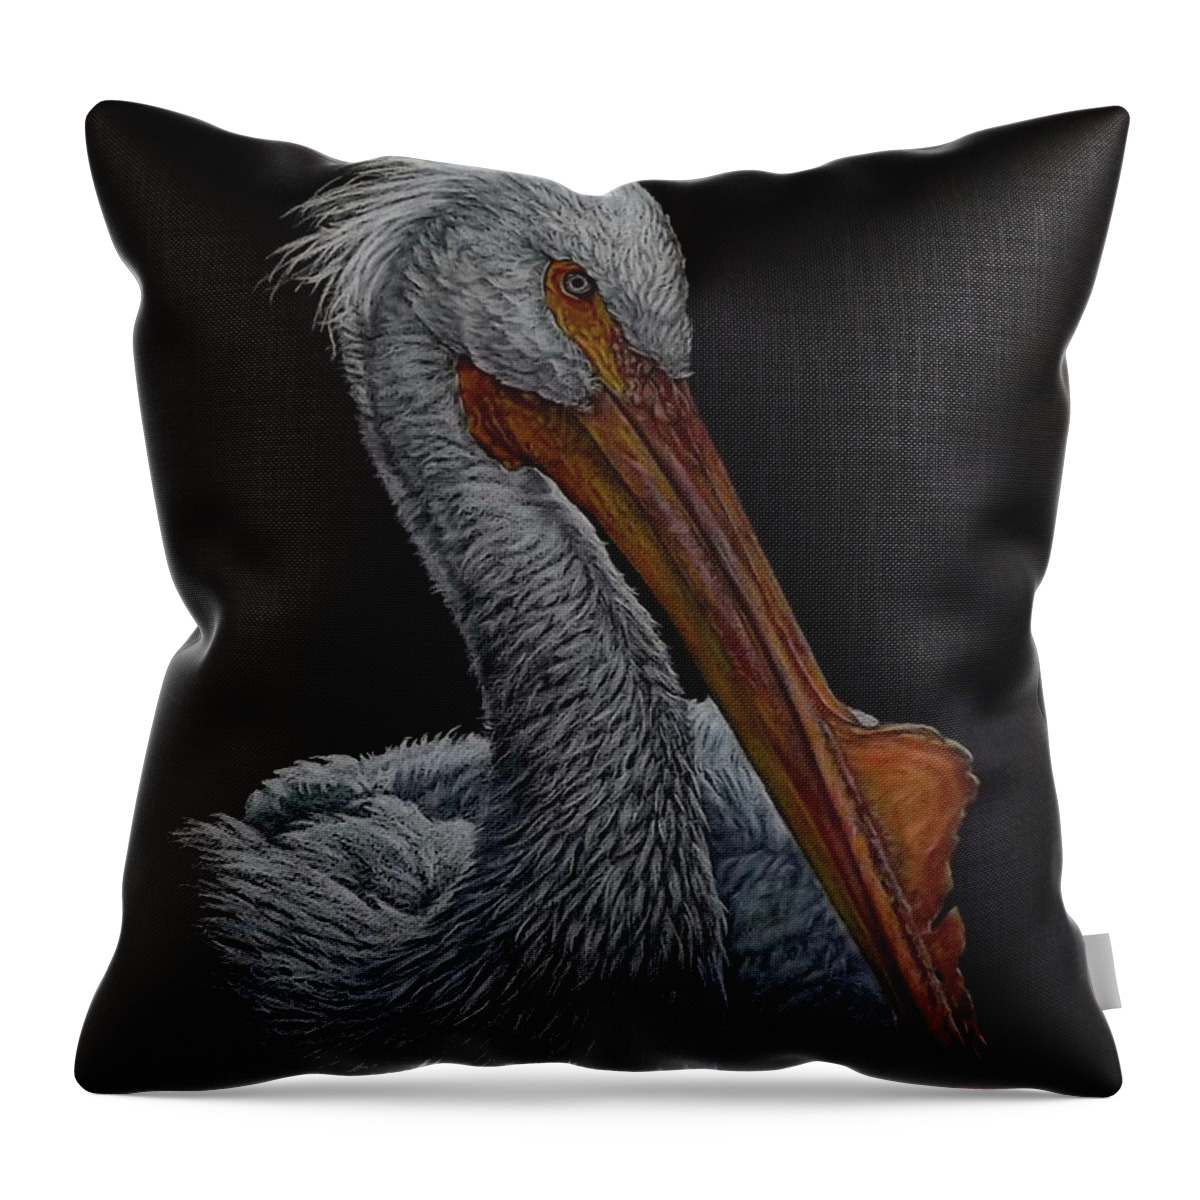 Bird Throw Pillow featuring the painting Zamboni by Linda Becker